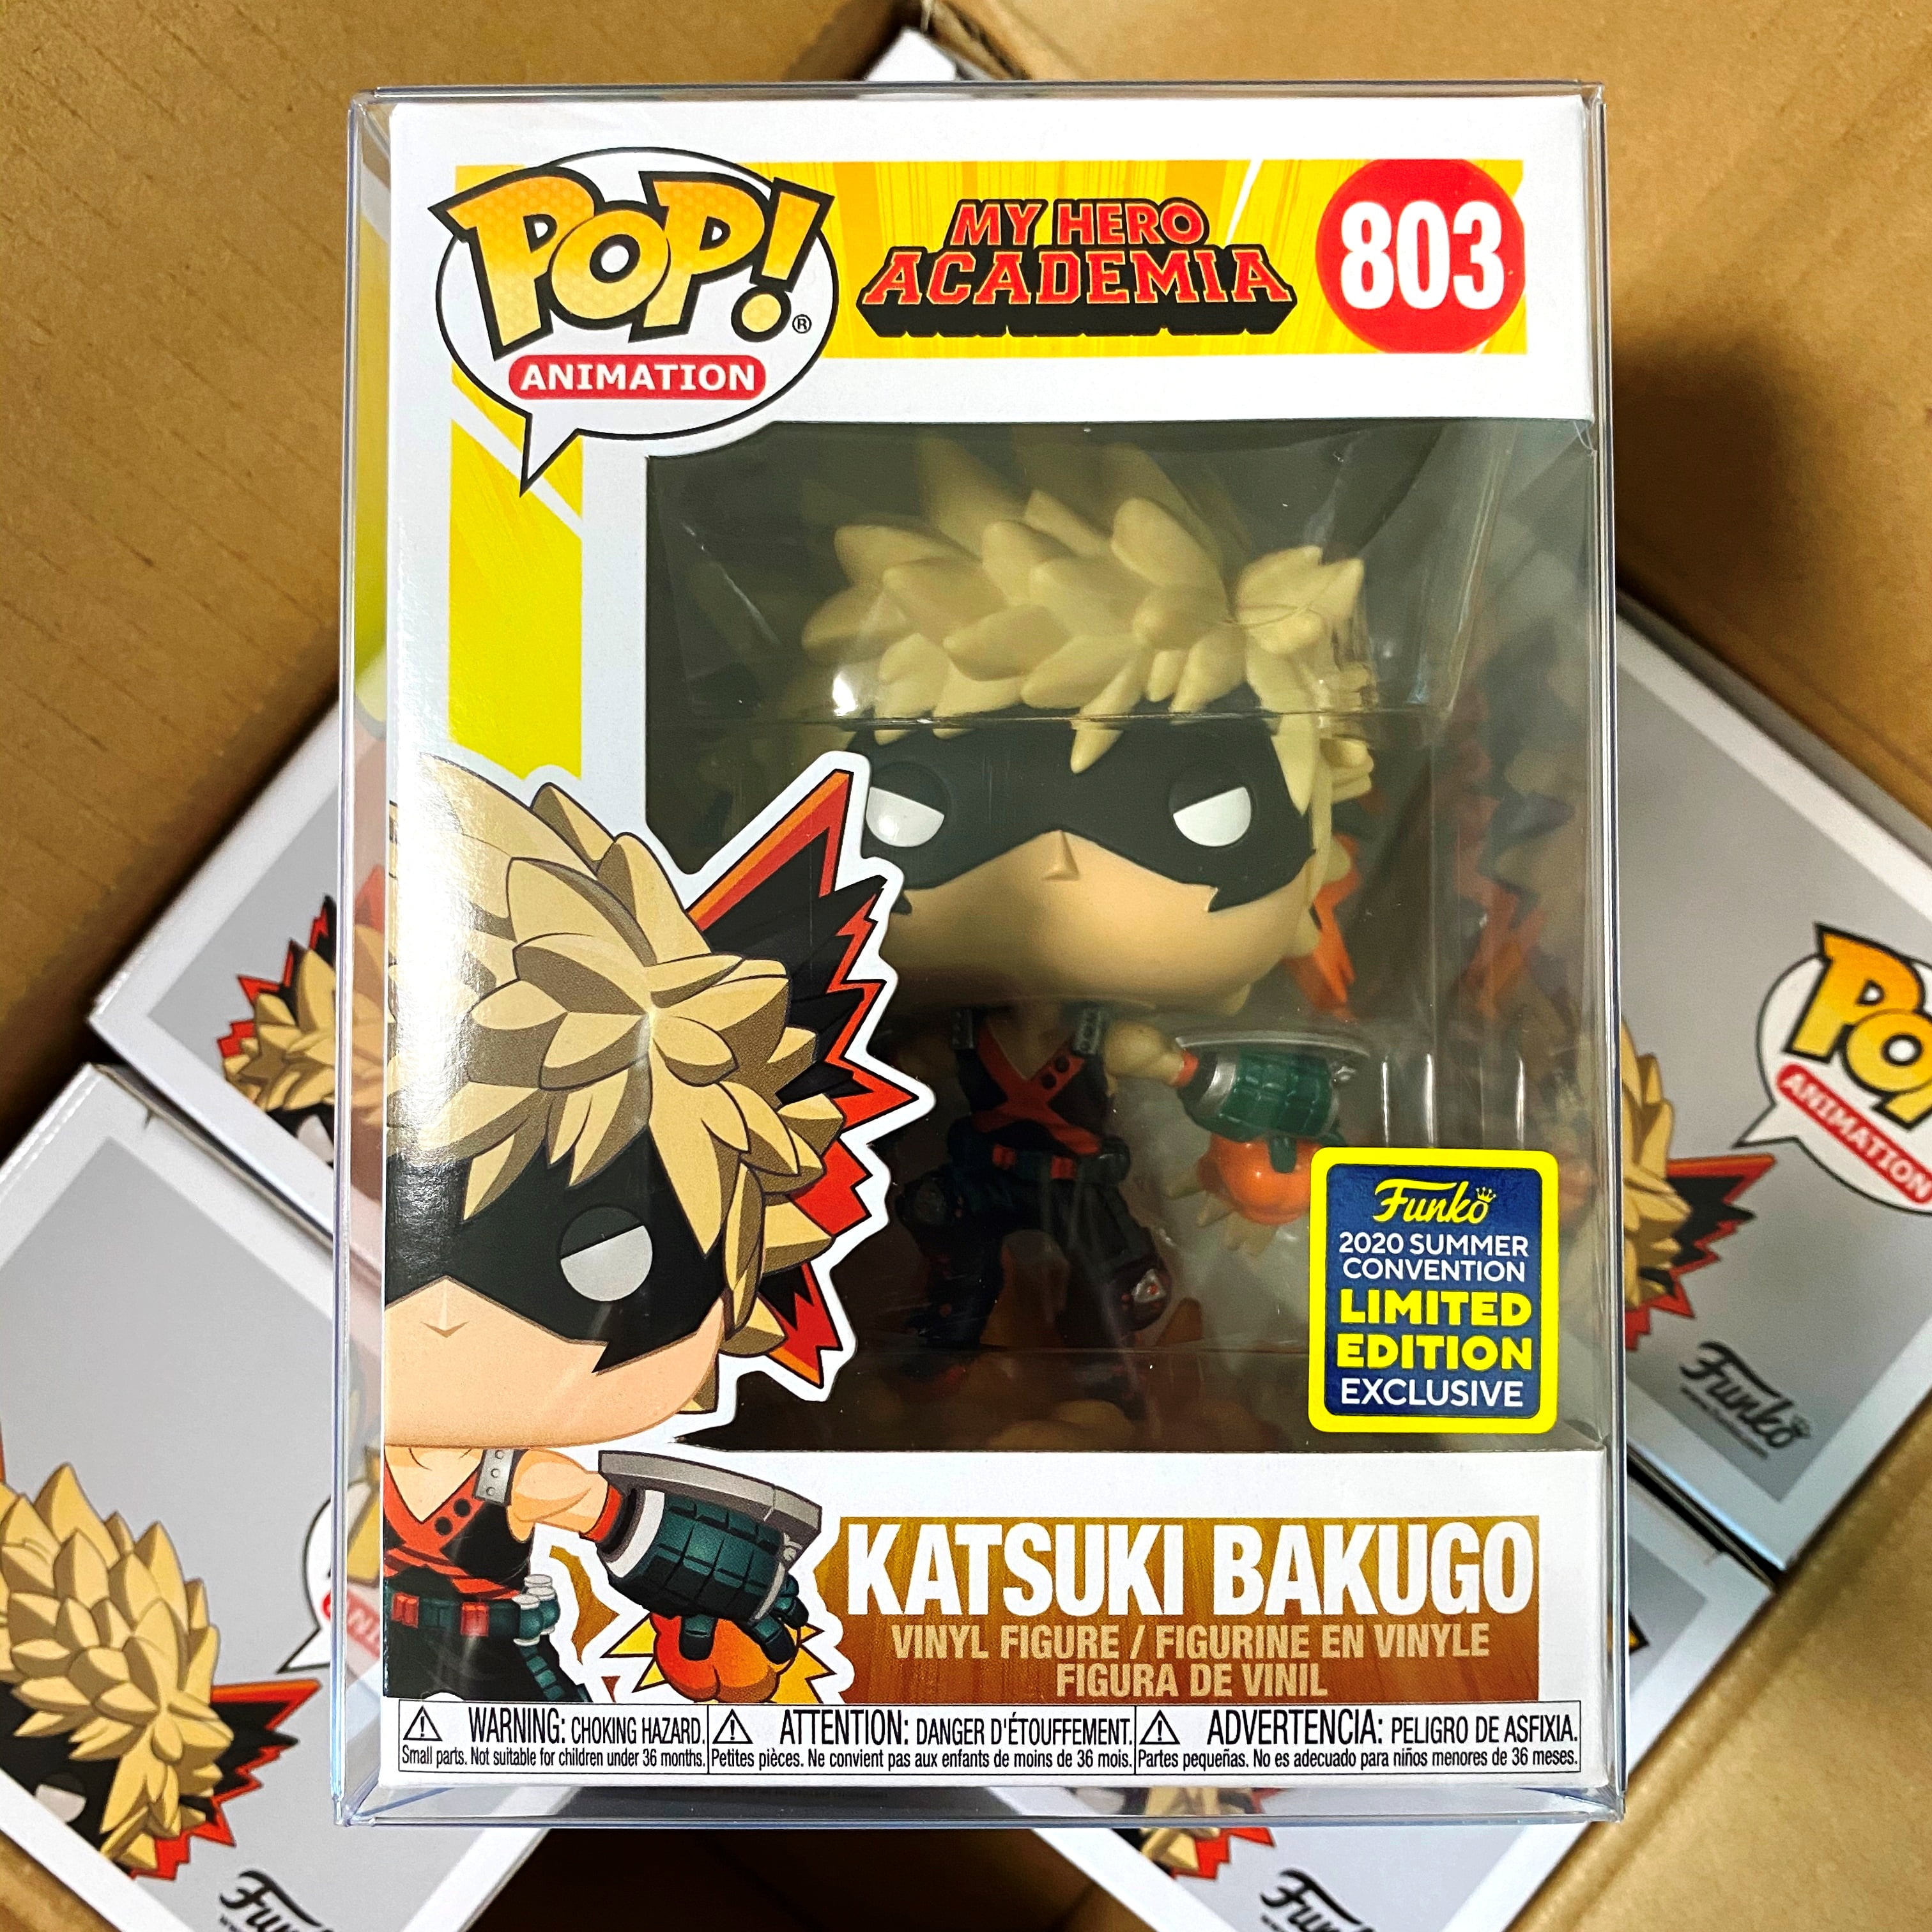 My Hero Academia #803 Katsuki Bakugo Exclusive Vinyl Action Figures # Funko Pop